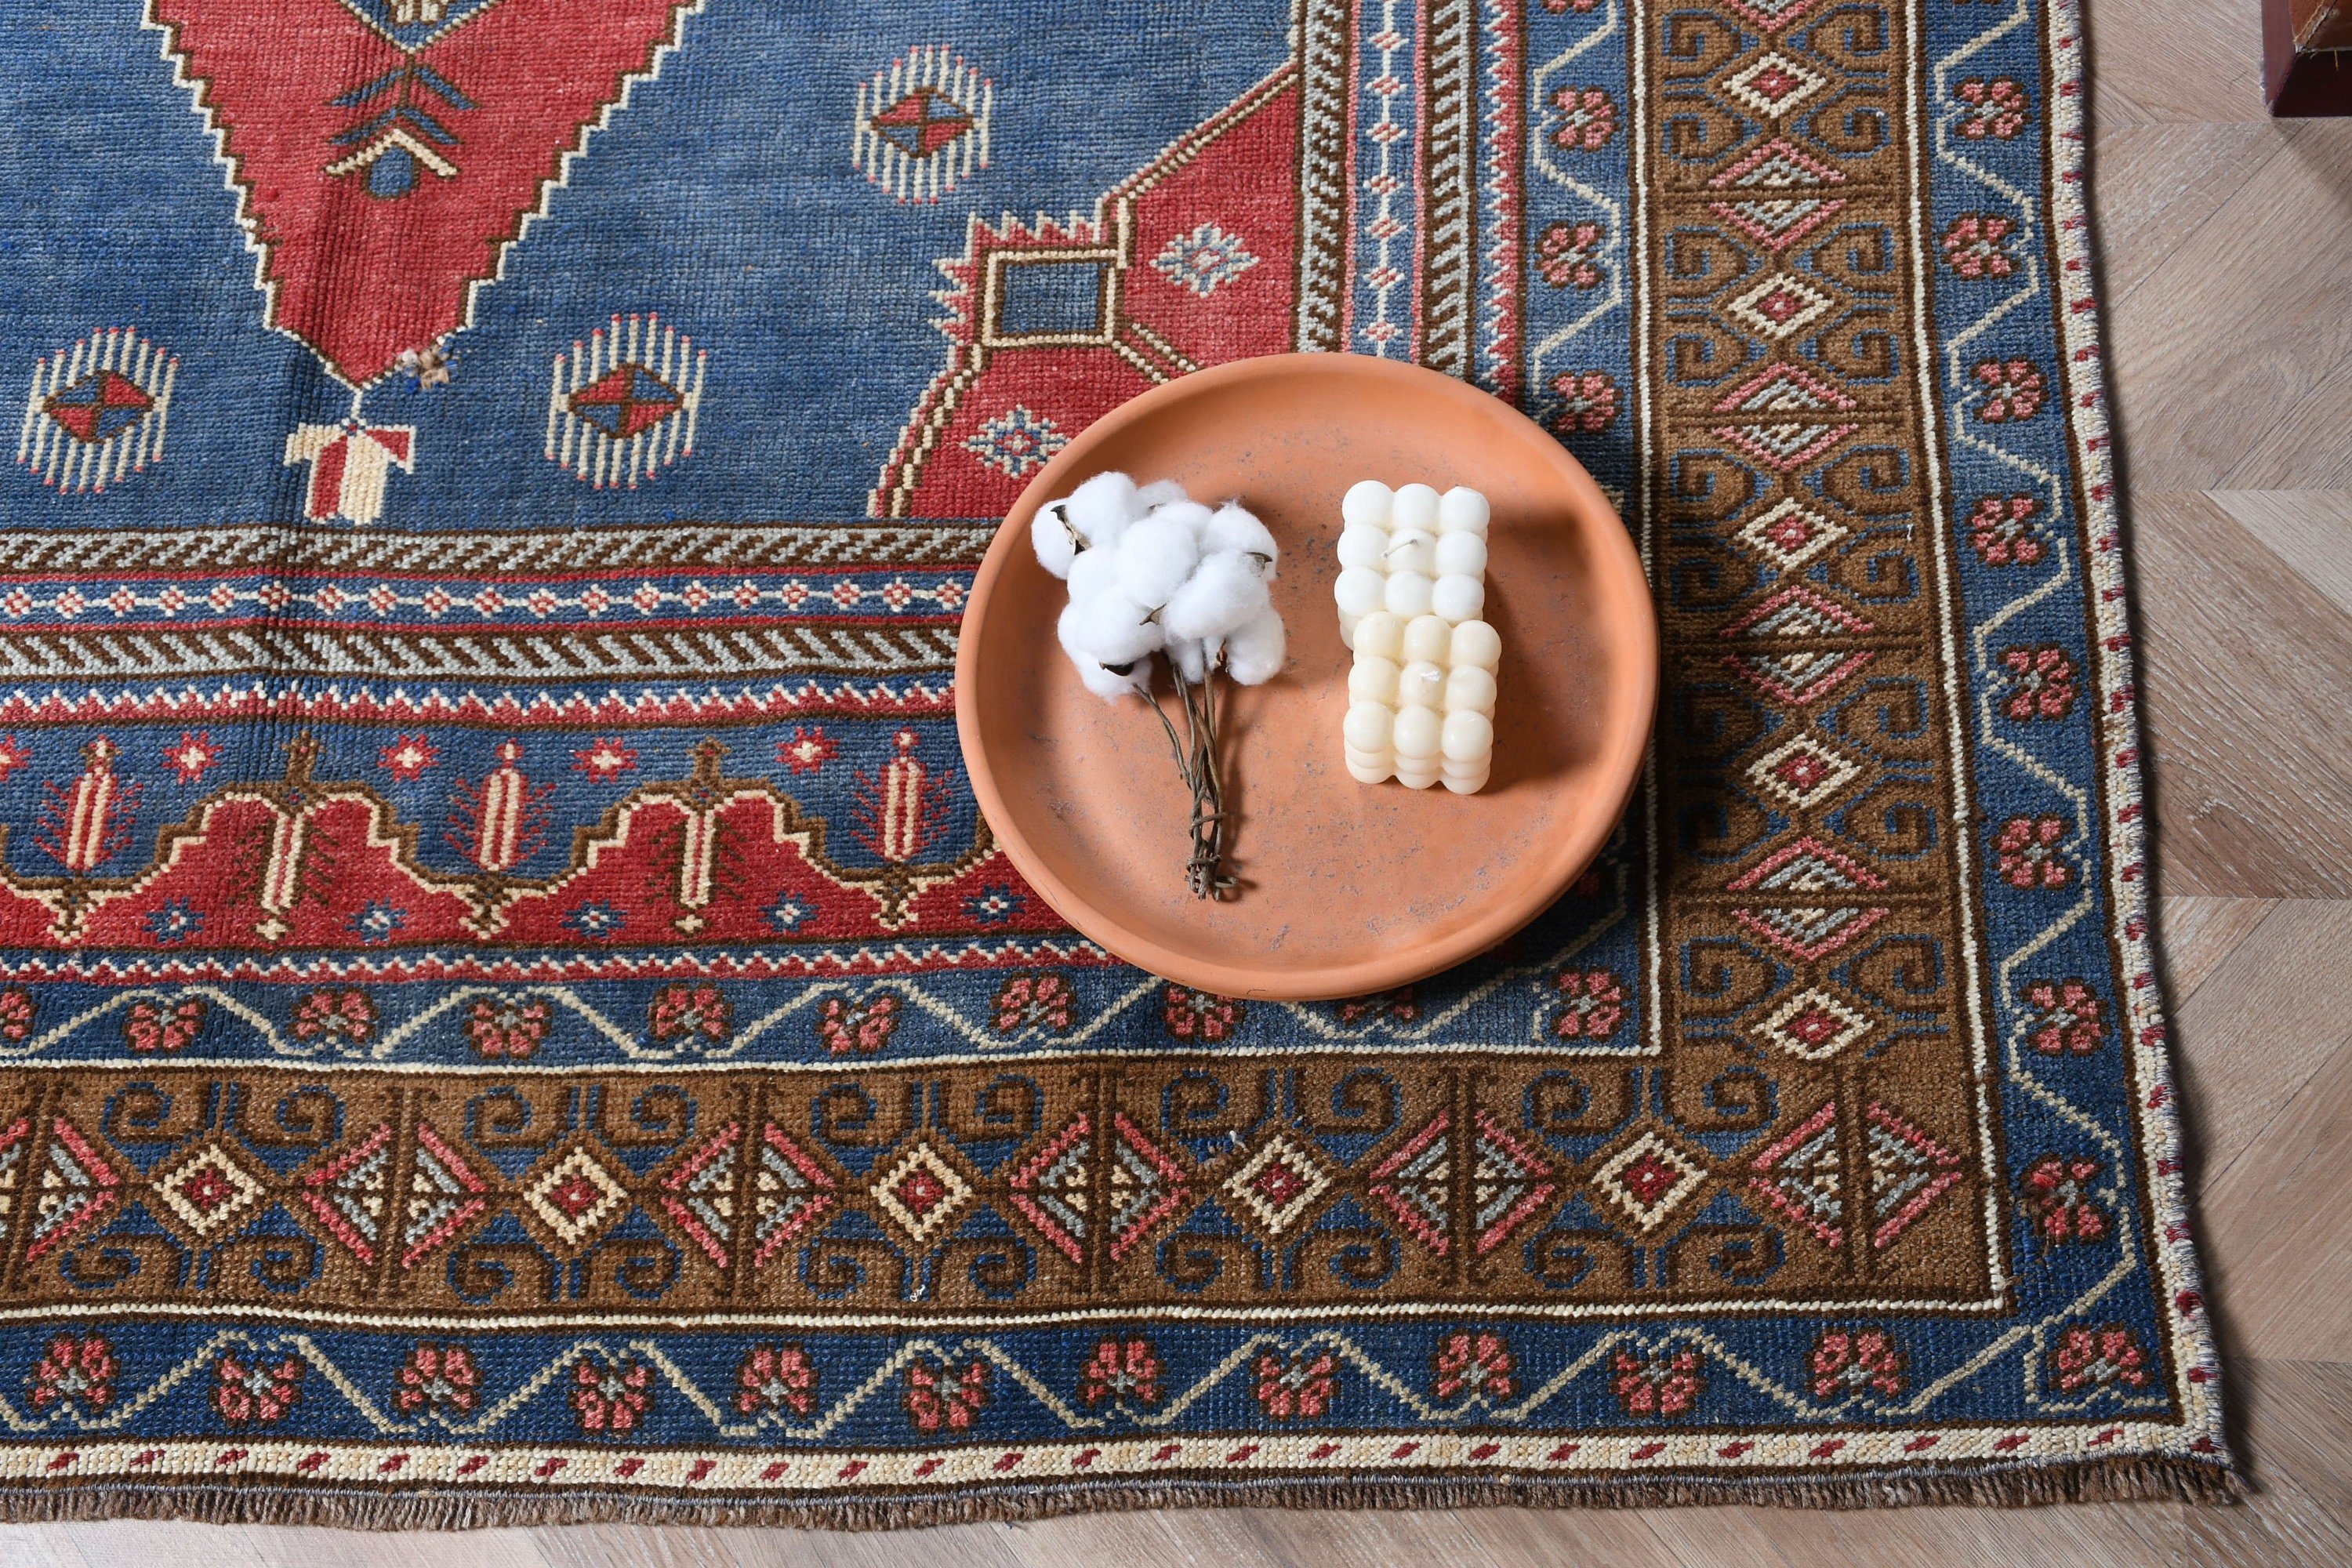 Dining Room Rug, Vintage Rug, Living Room Rug, Oushak Rug, Outdoor Rug, 5.3x10.3 ft Large Rugs, Red Moroccan Rugs, Antique Rug, Turkish Rug